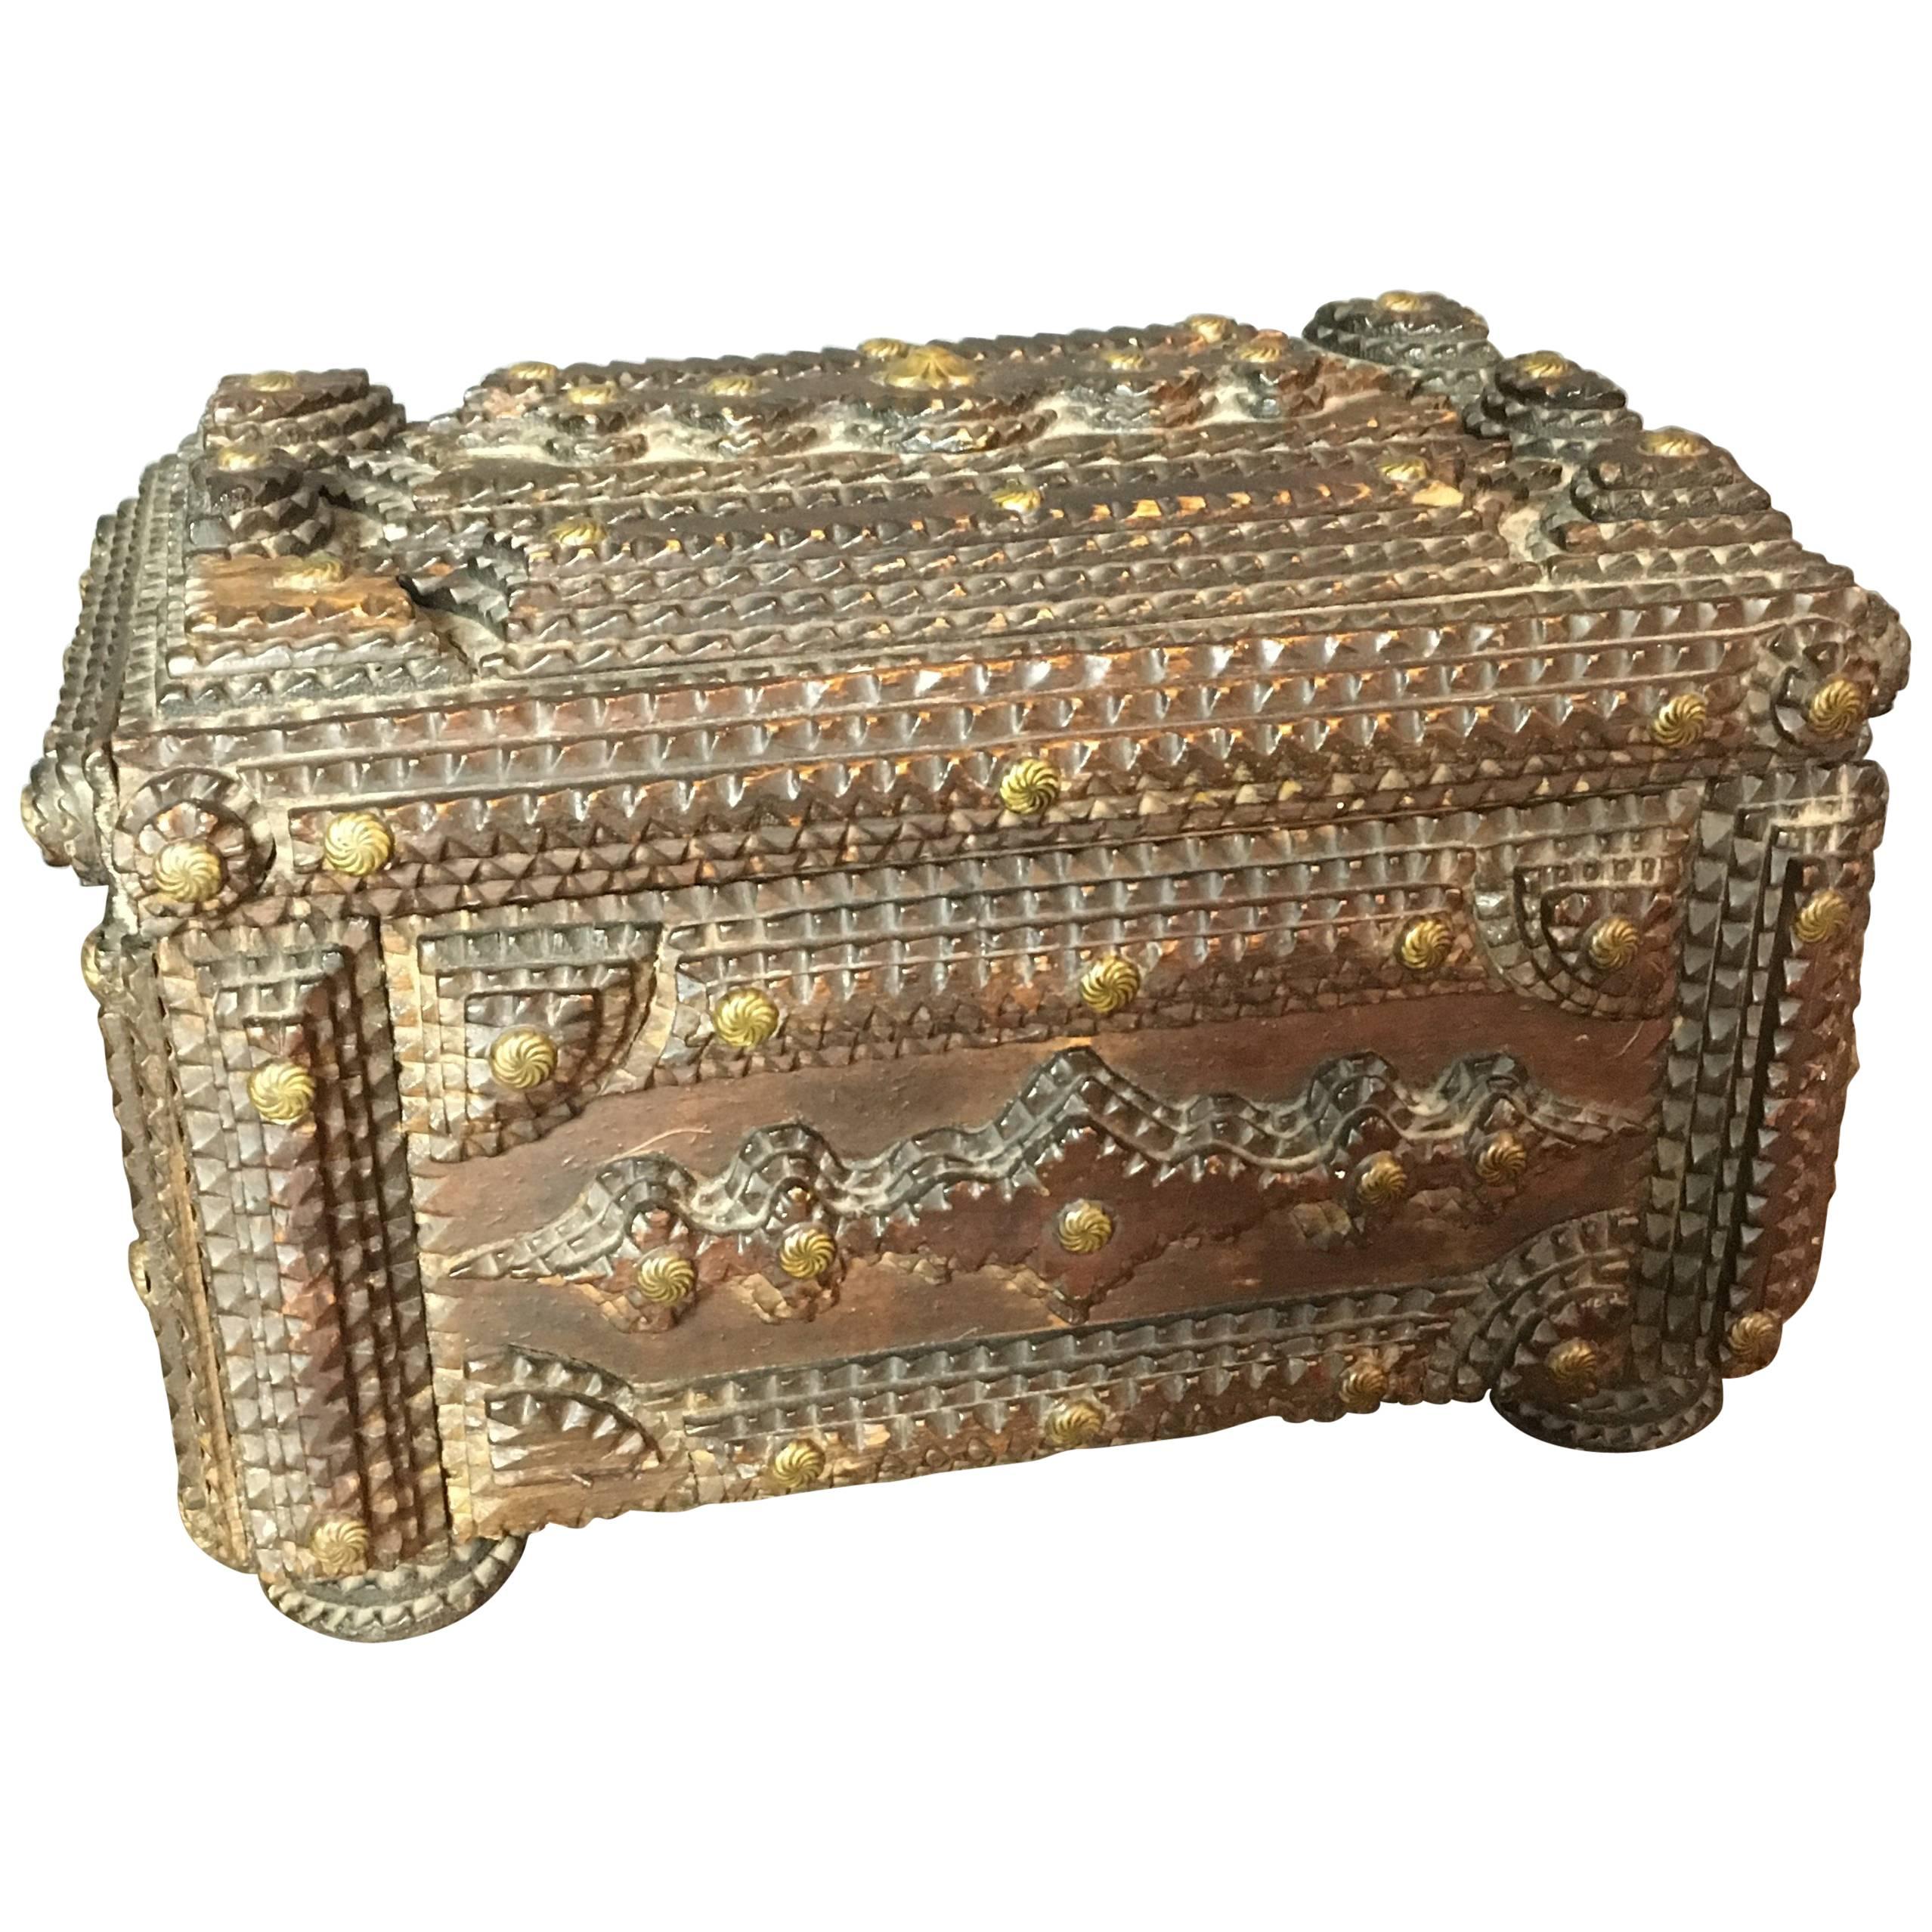 Antique Handcrafted Tramp Art Wooden Box